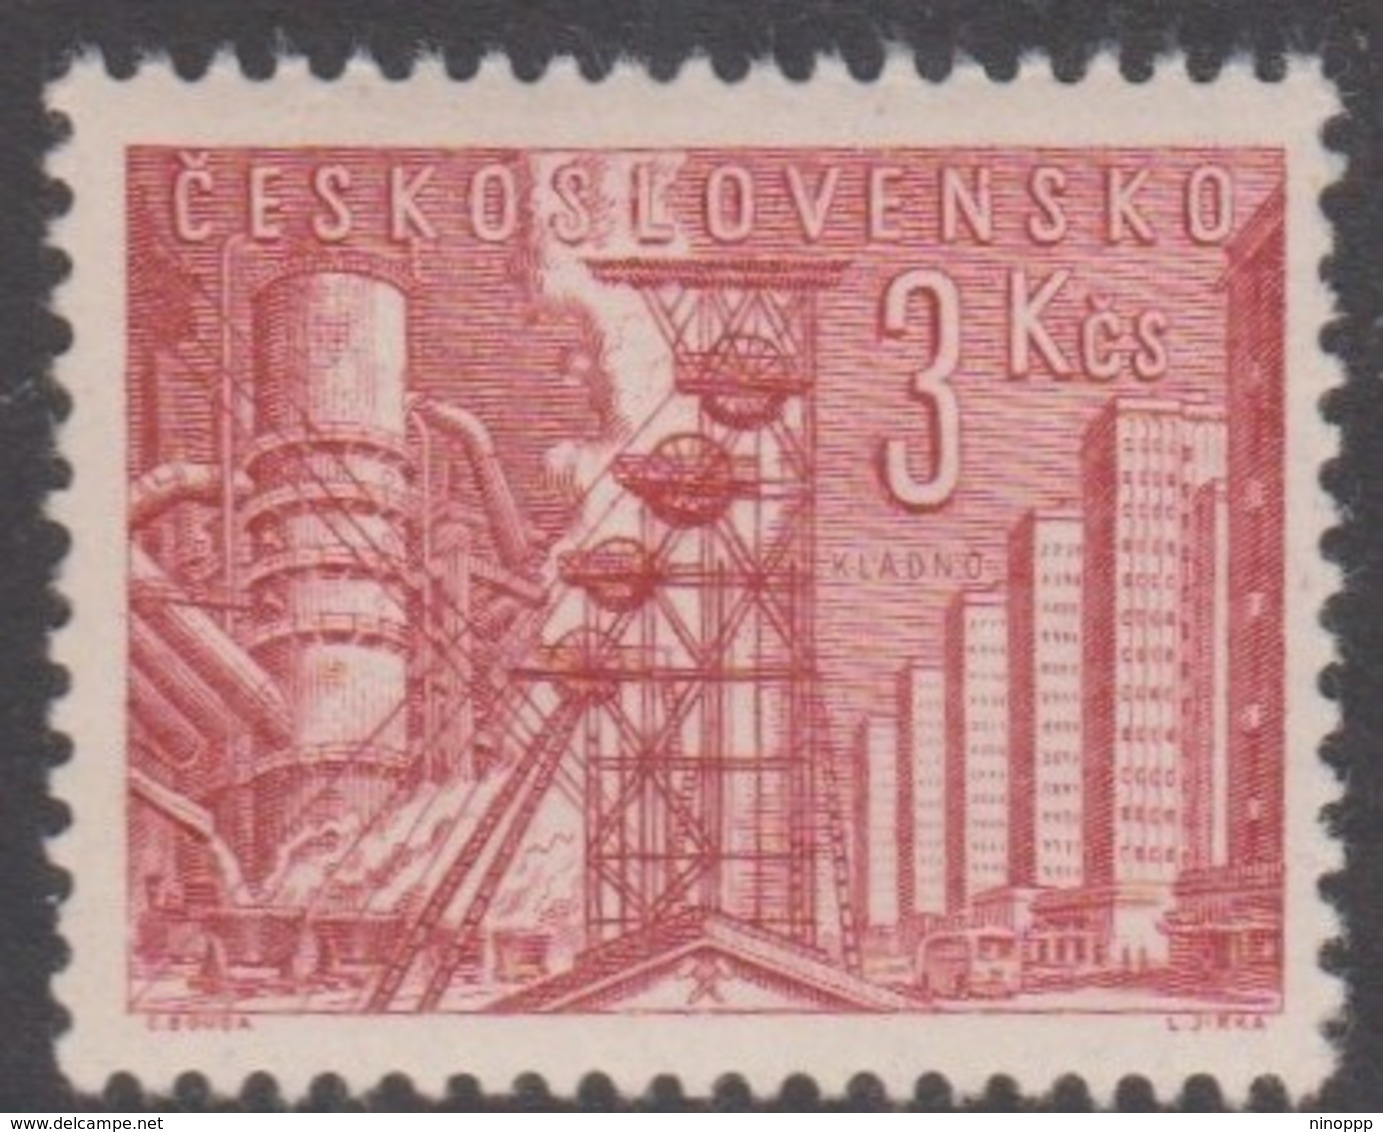 Czechoslovakia Scott 1047 1961 Blast Furnace 3k Dull Red, Mint Never Hinged - Unused Stamps